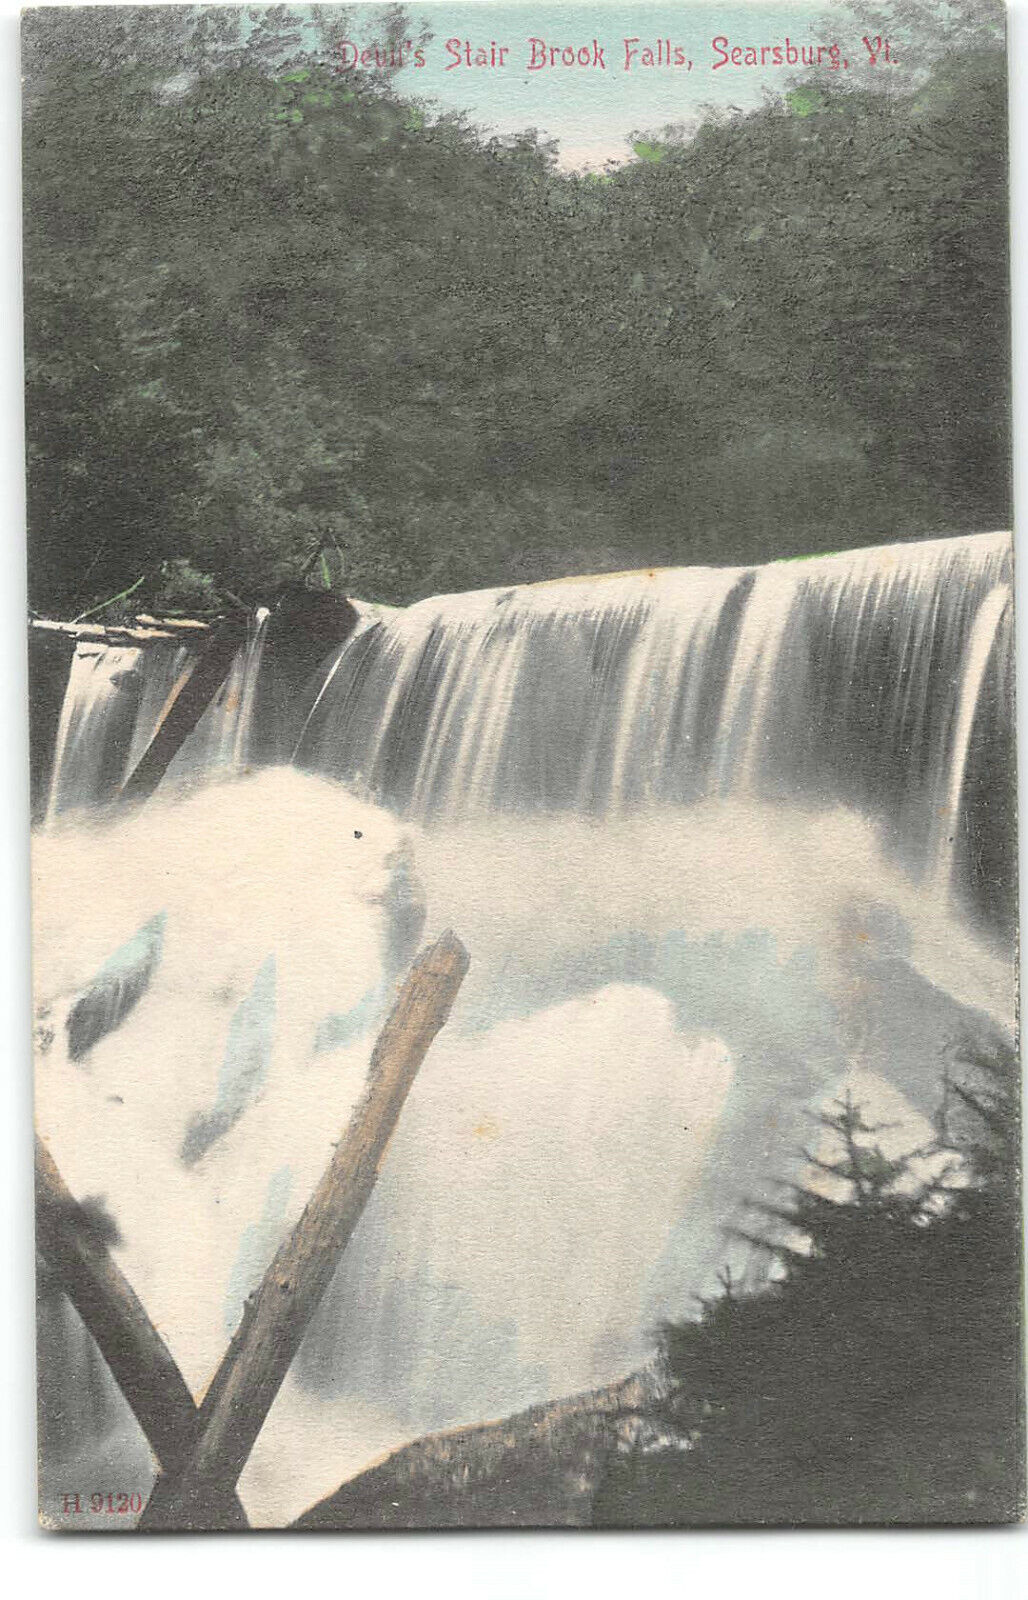 Vermont-Searsburg-Devil's Stair Brook Falls-Waterfall-Antique Postcard